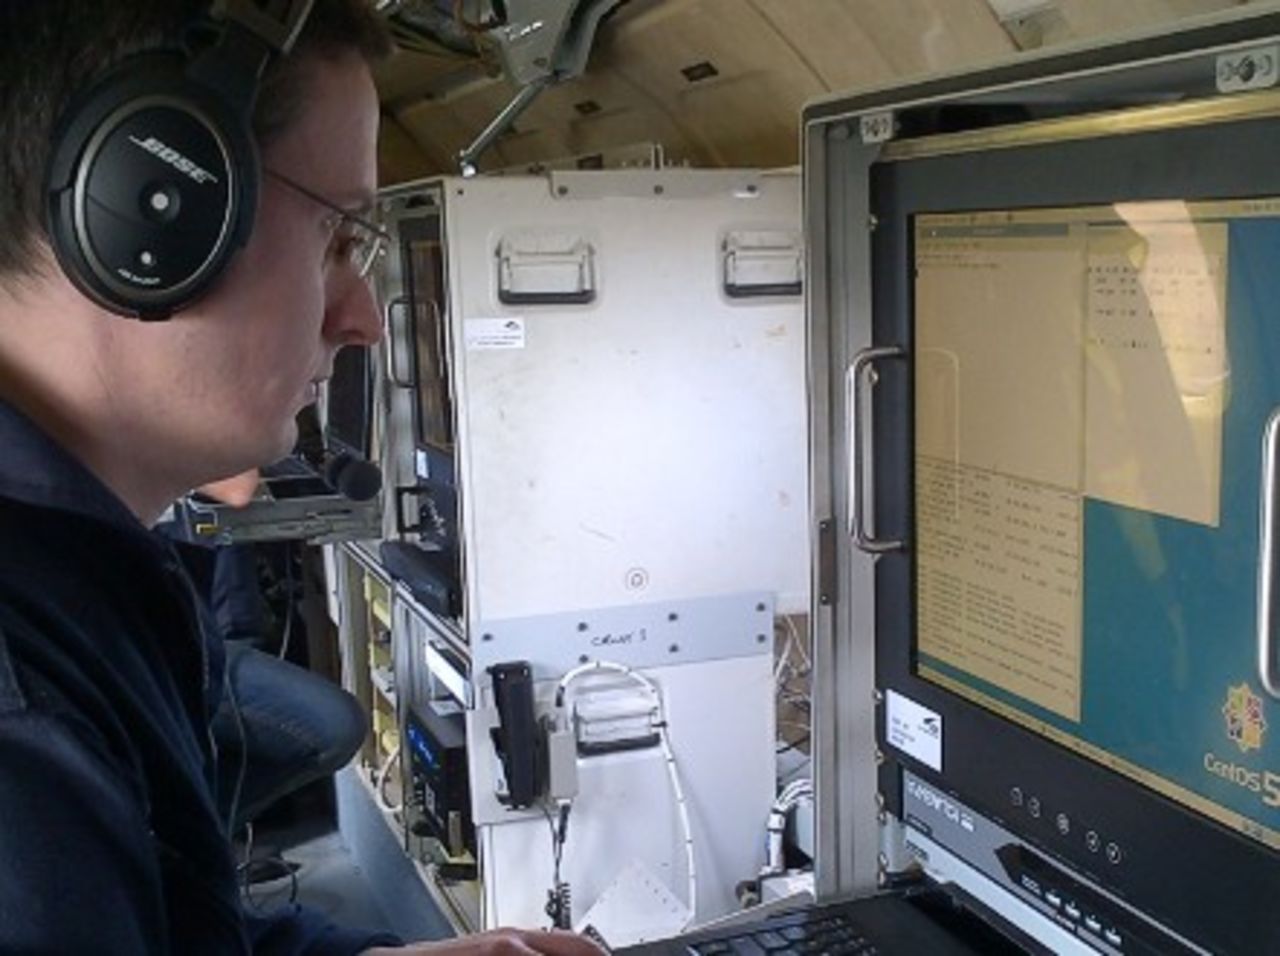 A flight test engineer monitors a computer display screen